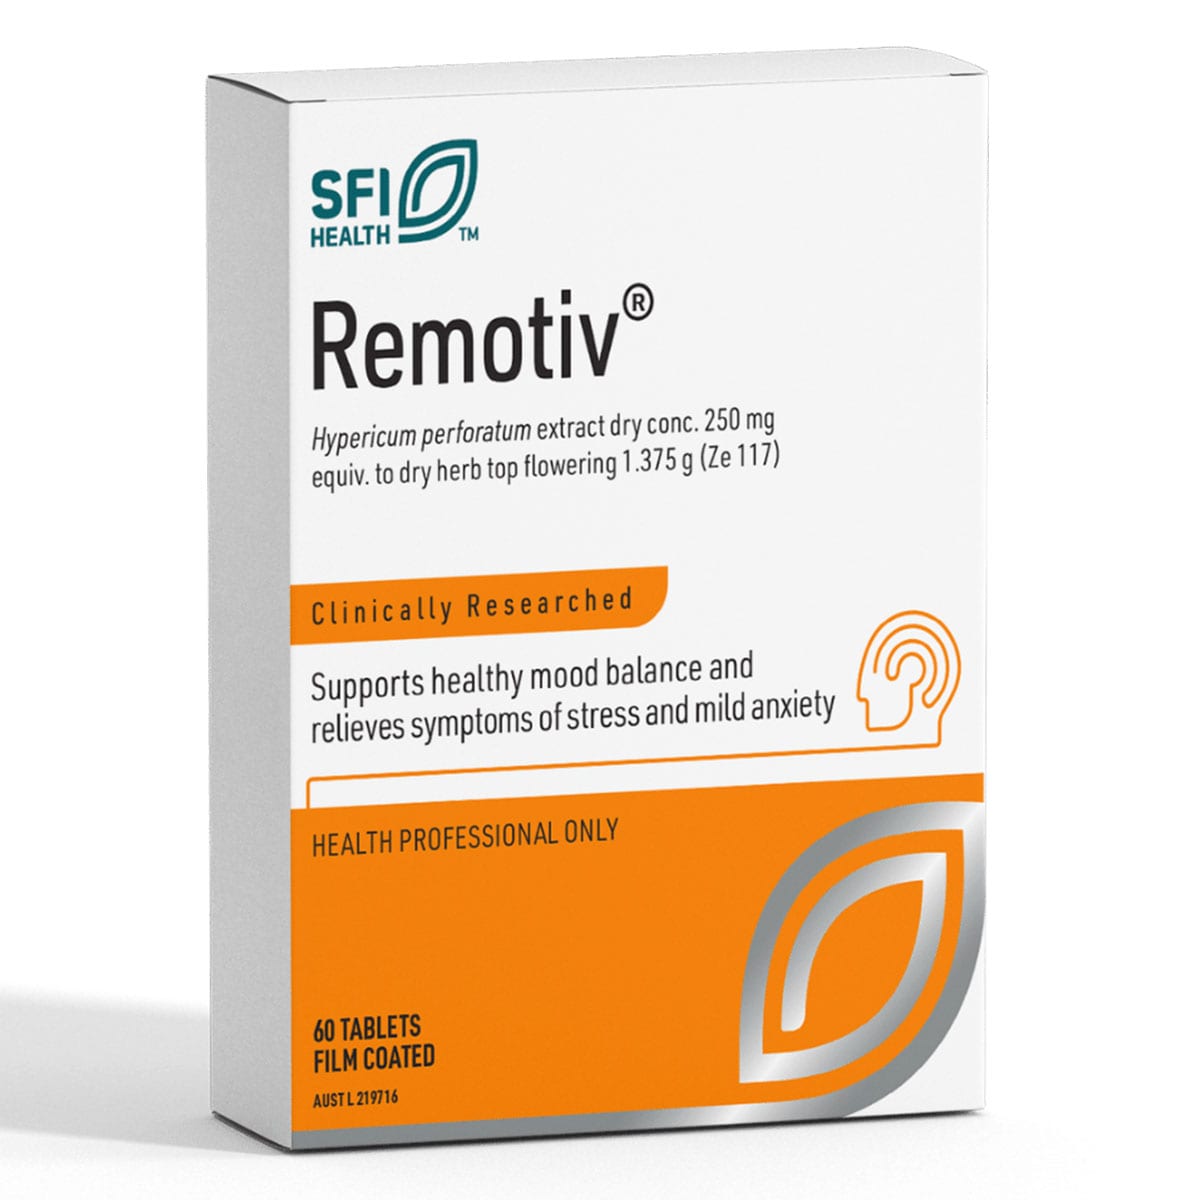 SFI Health Remotiv 60 Tablets